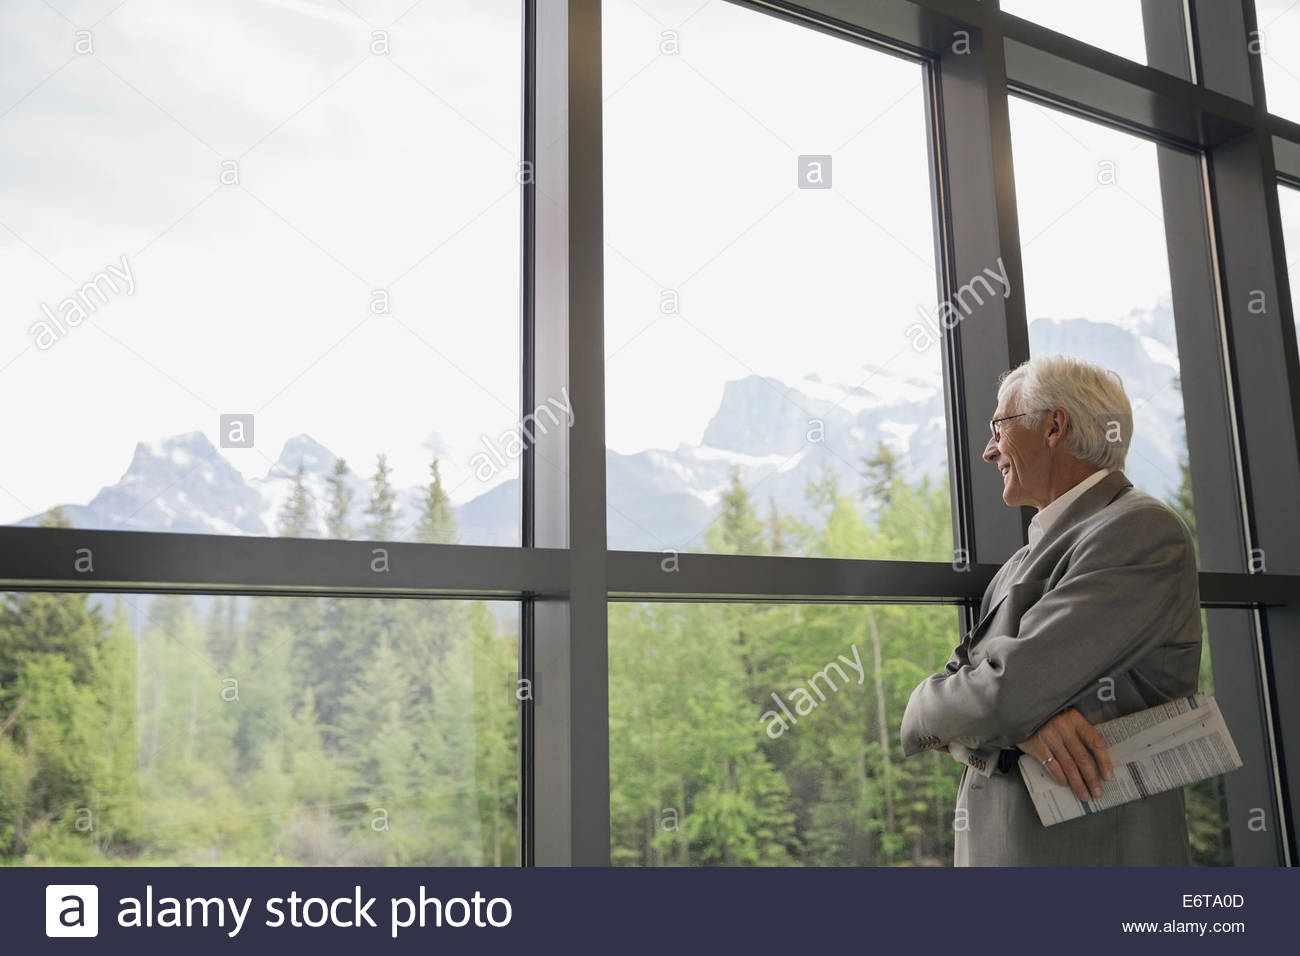 Businessman admiring landscape from window Stock Photo